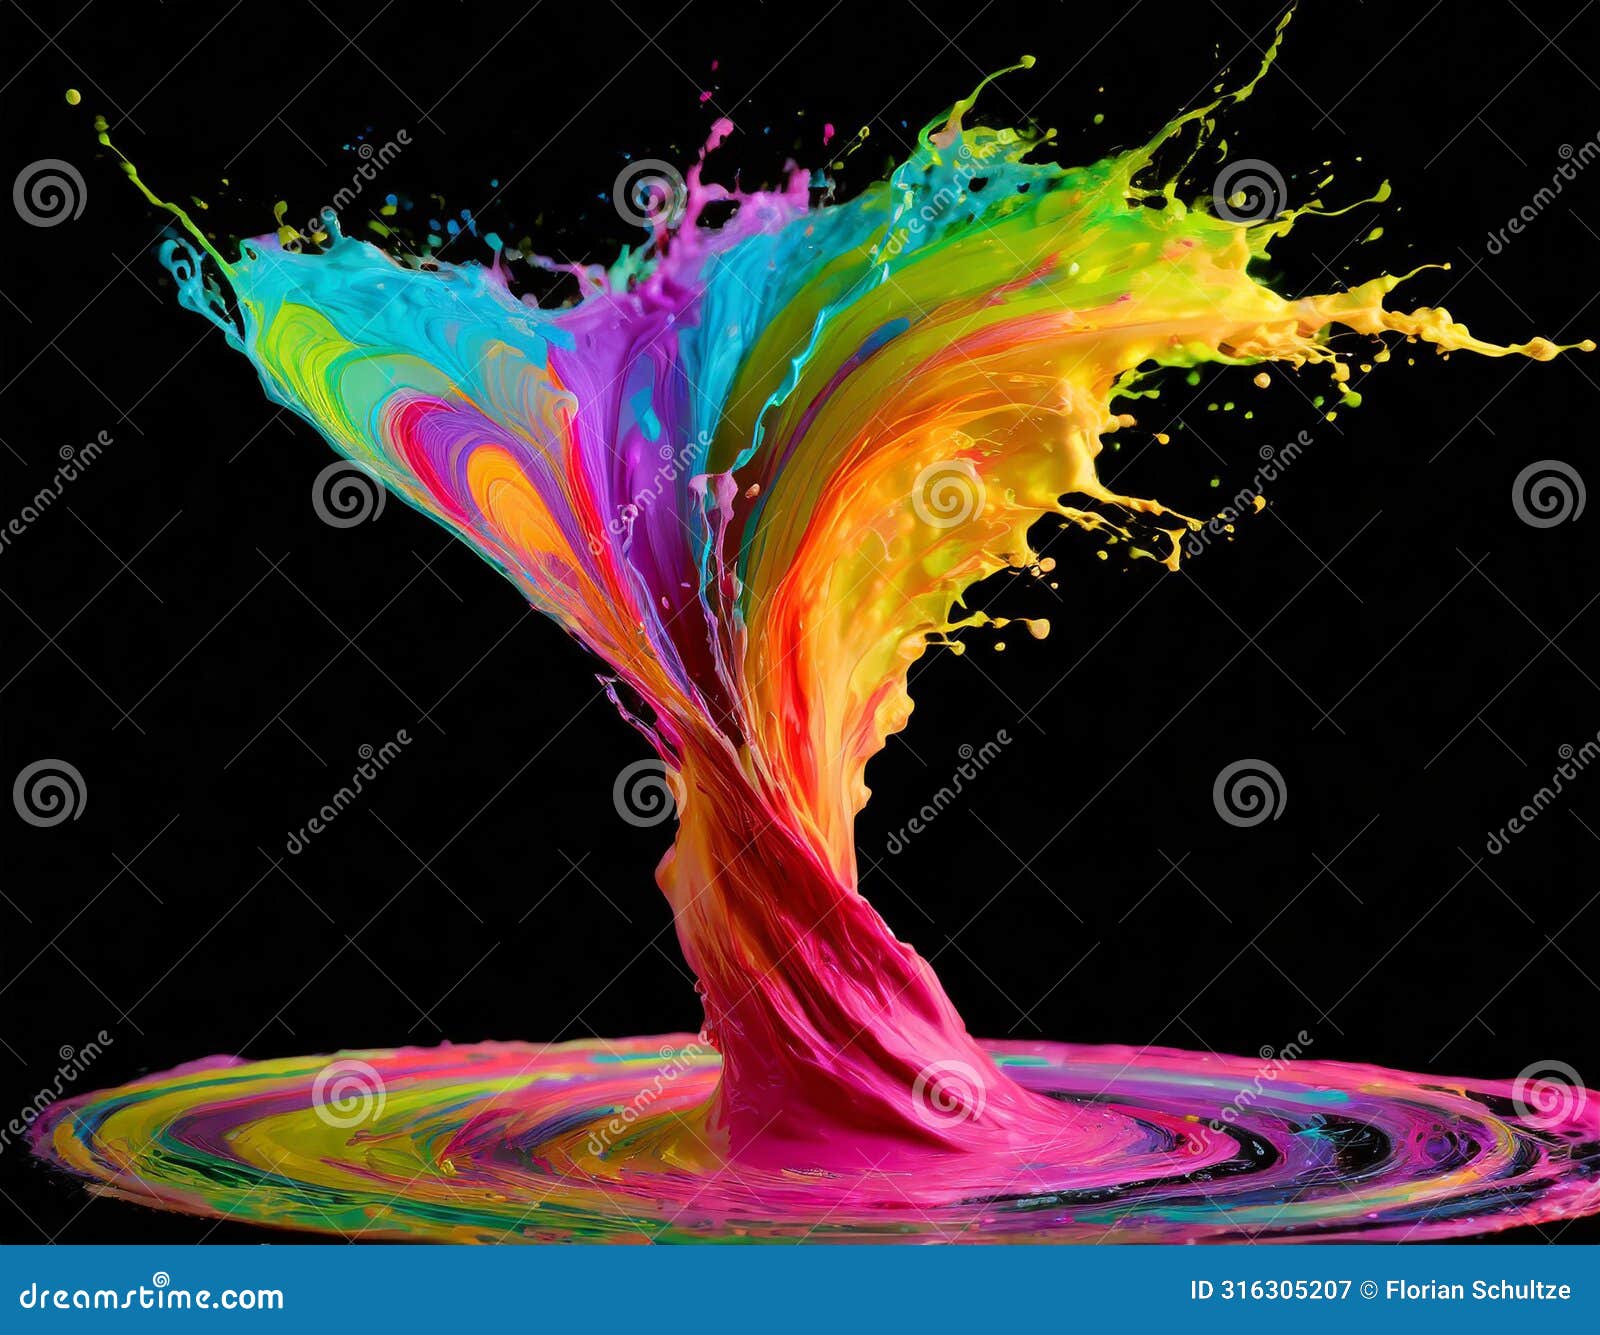 colorful abstract paint splash resembling a vibrant tornado